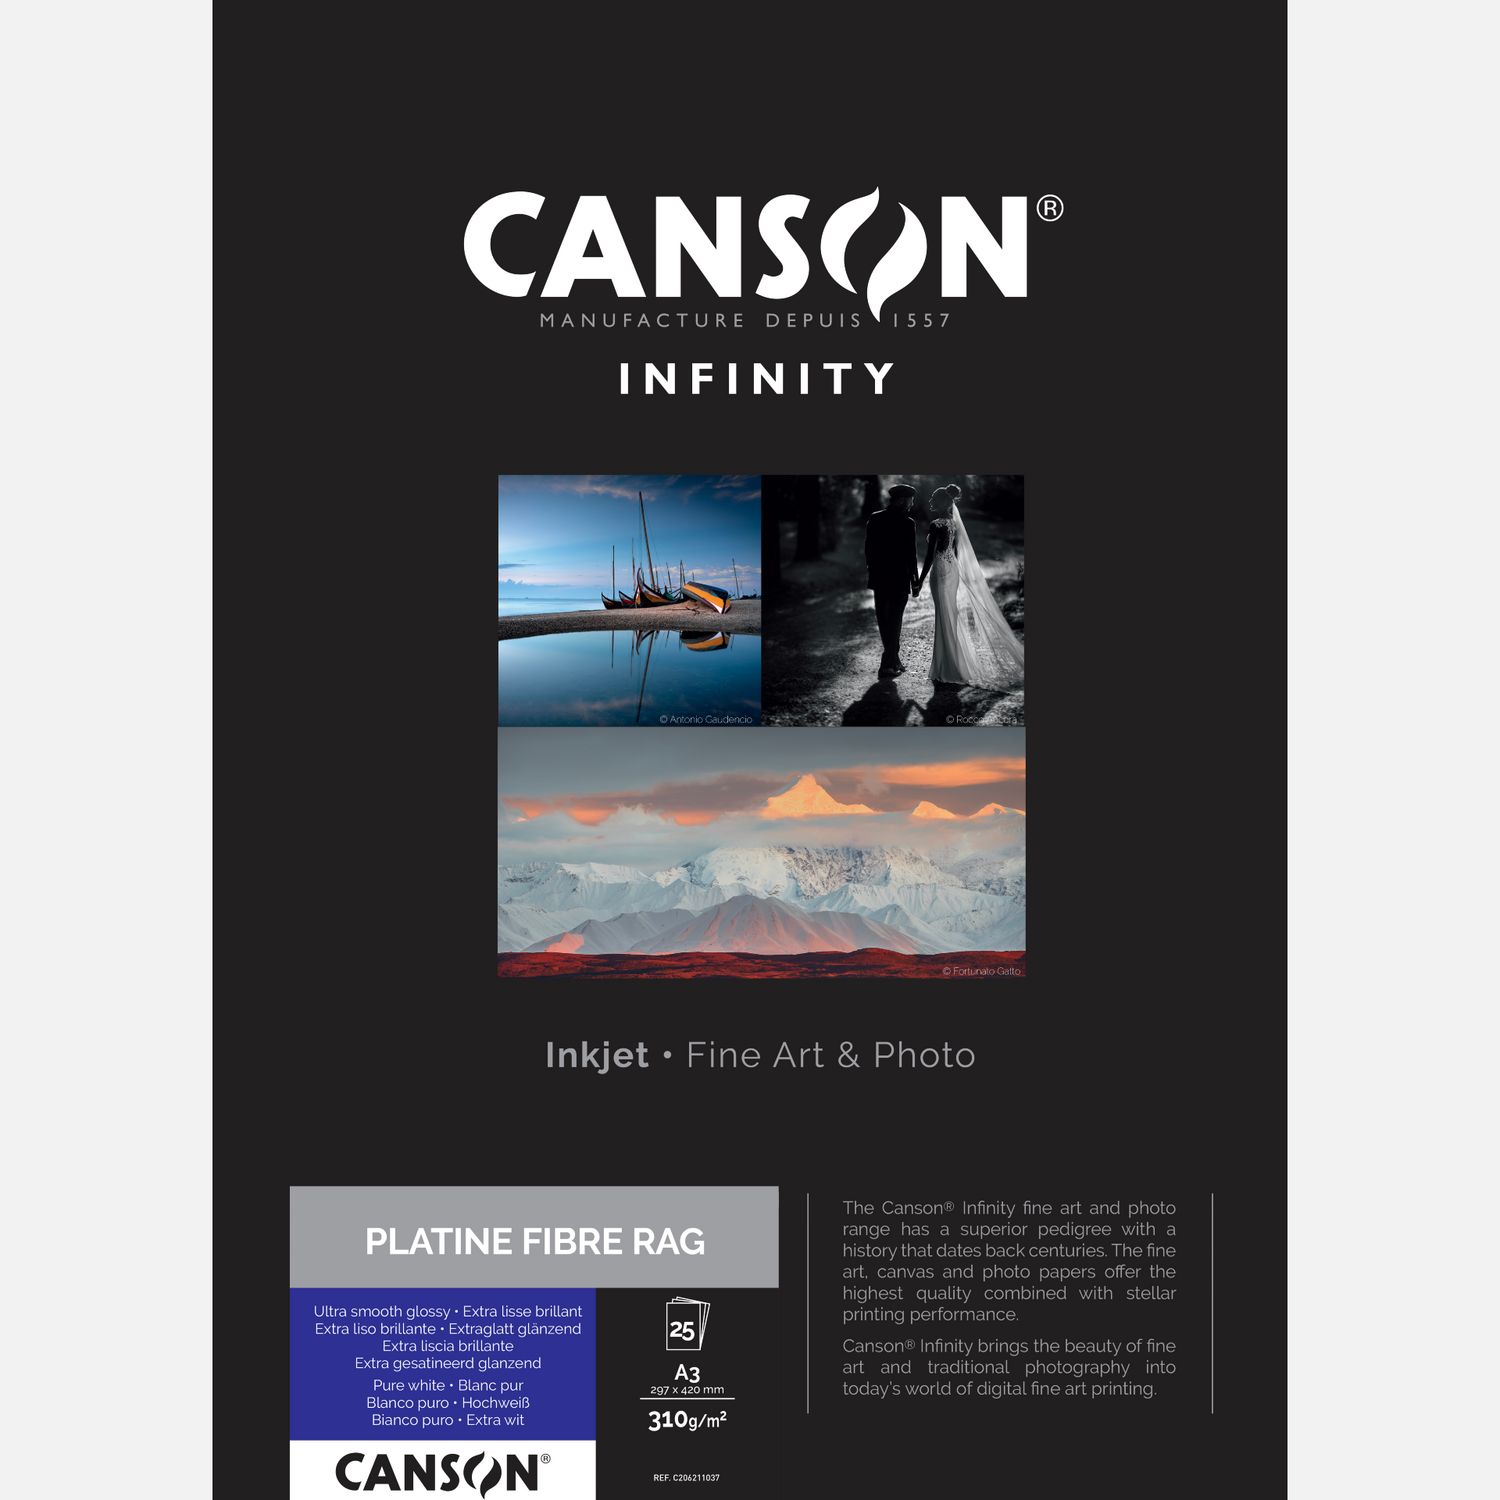 Canson Infinity Platine Fibre Rag 310 g/m² A3 - 25 feuilles